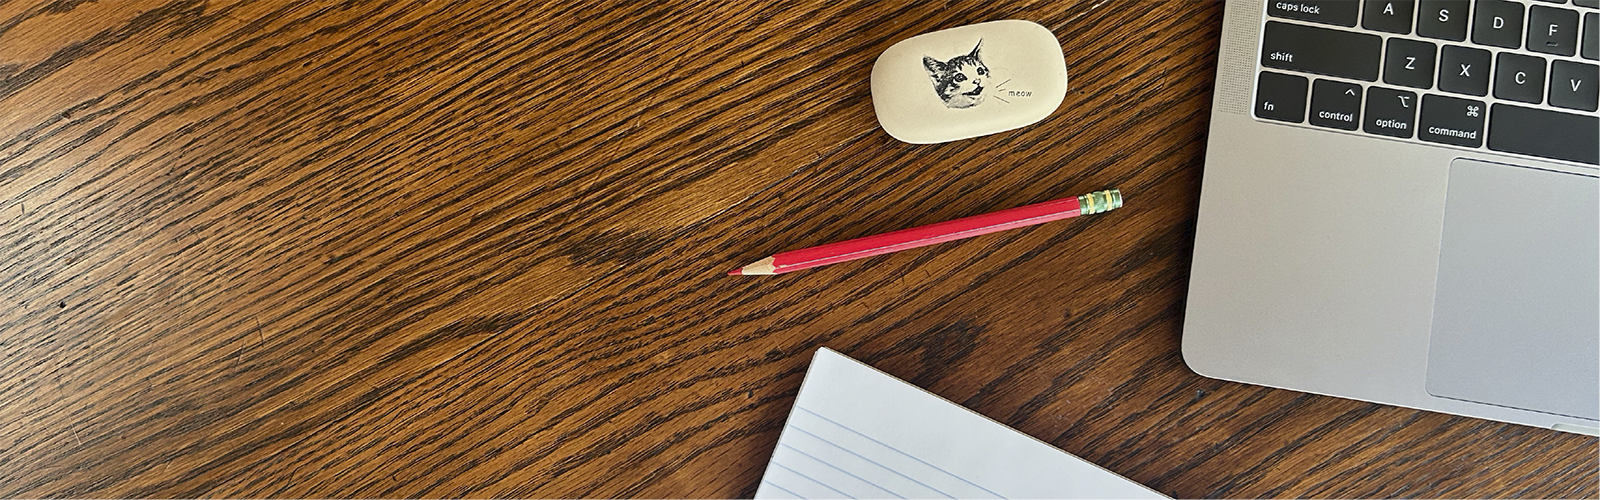 notebook-laptop-cat eraser header.png